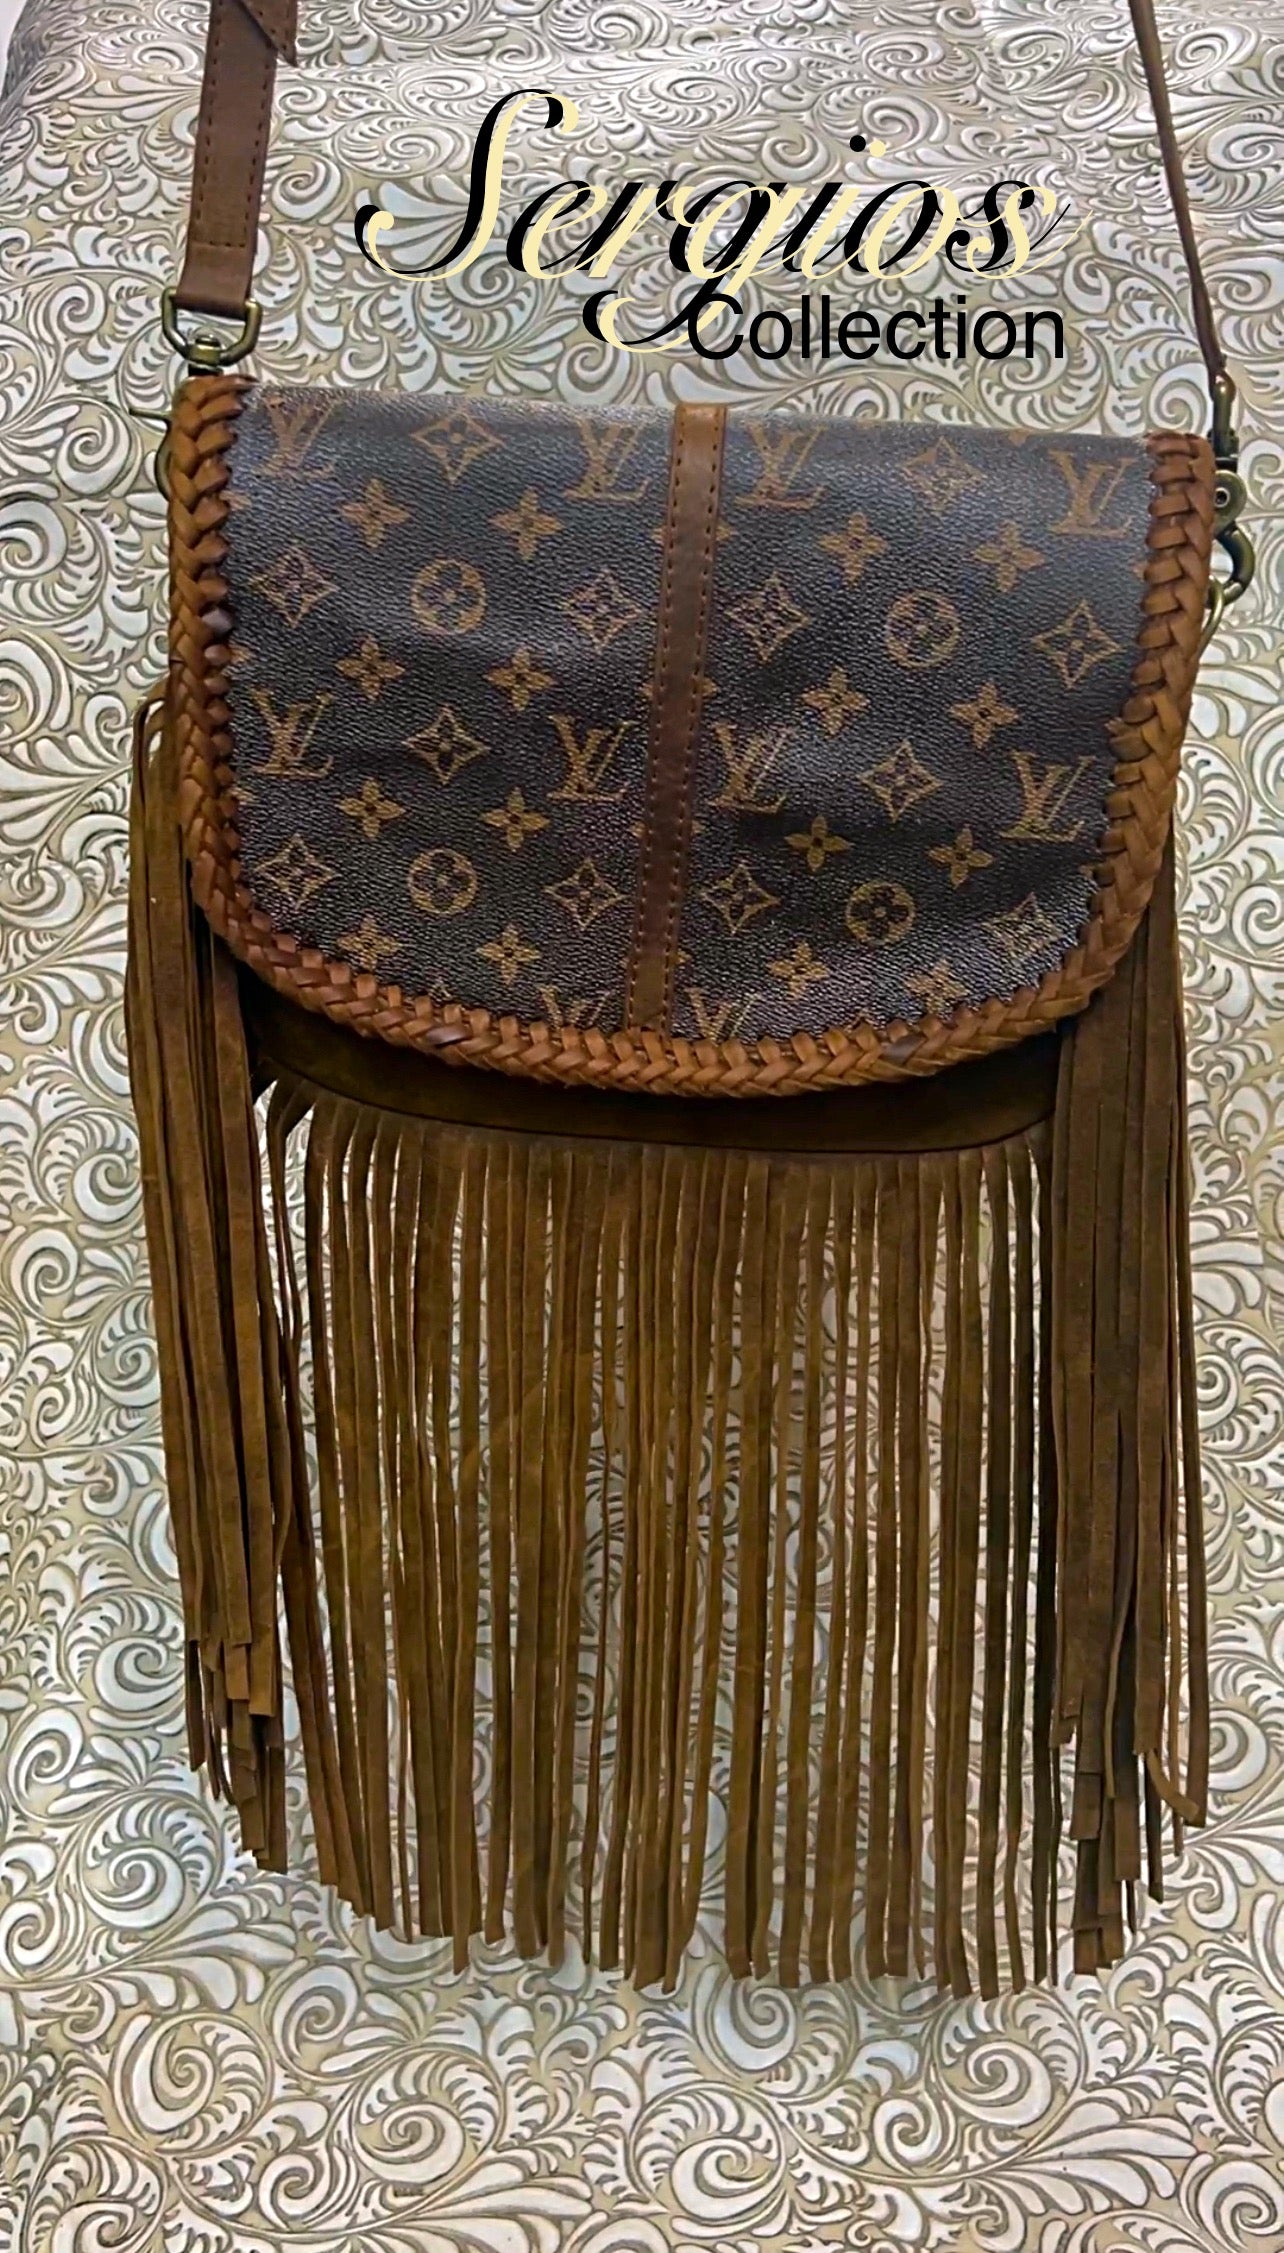 lv purse with fringe